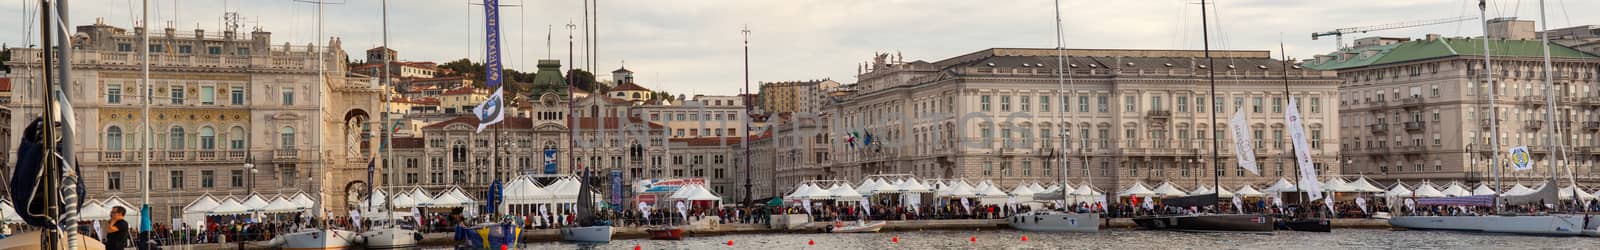 Trieste, Barcolana, 2013 by bepsimage